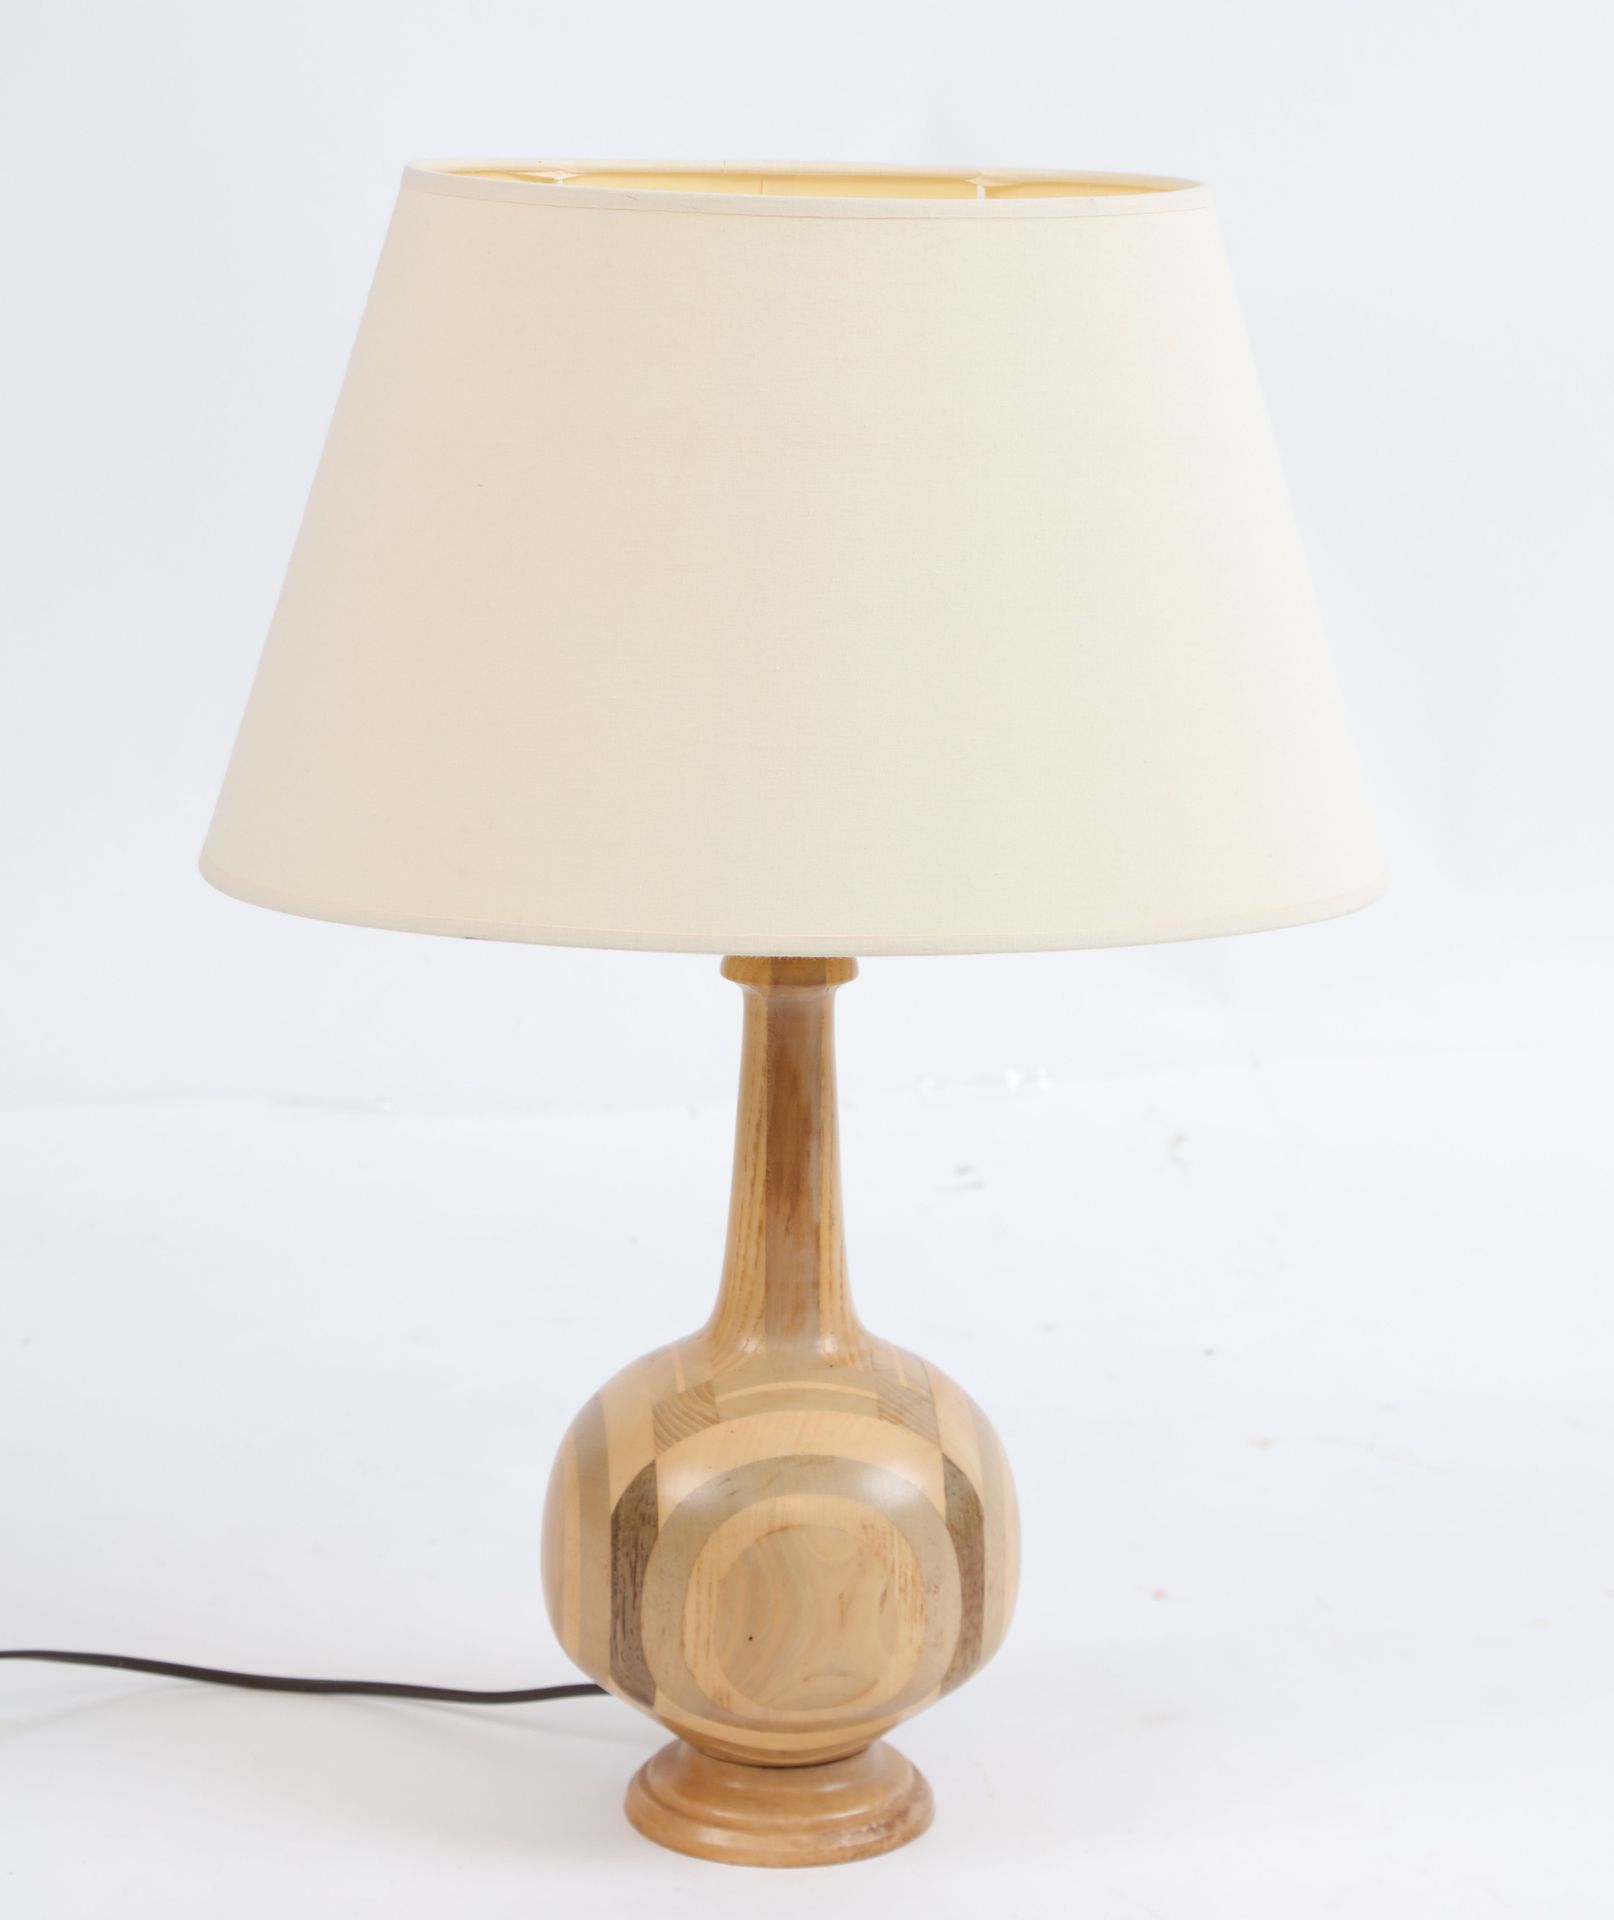 Null Lampe aus Naturholz (verschiedene Holzarten). Höhe : 48 cm.